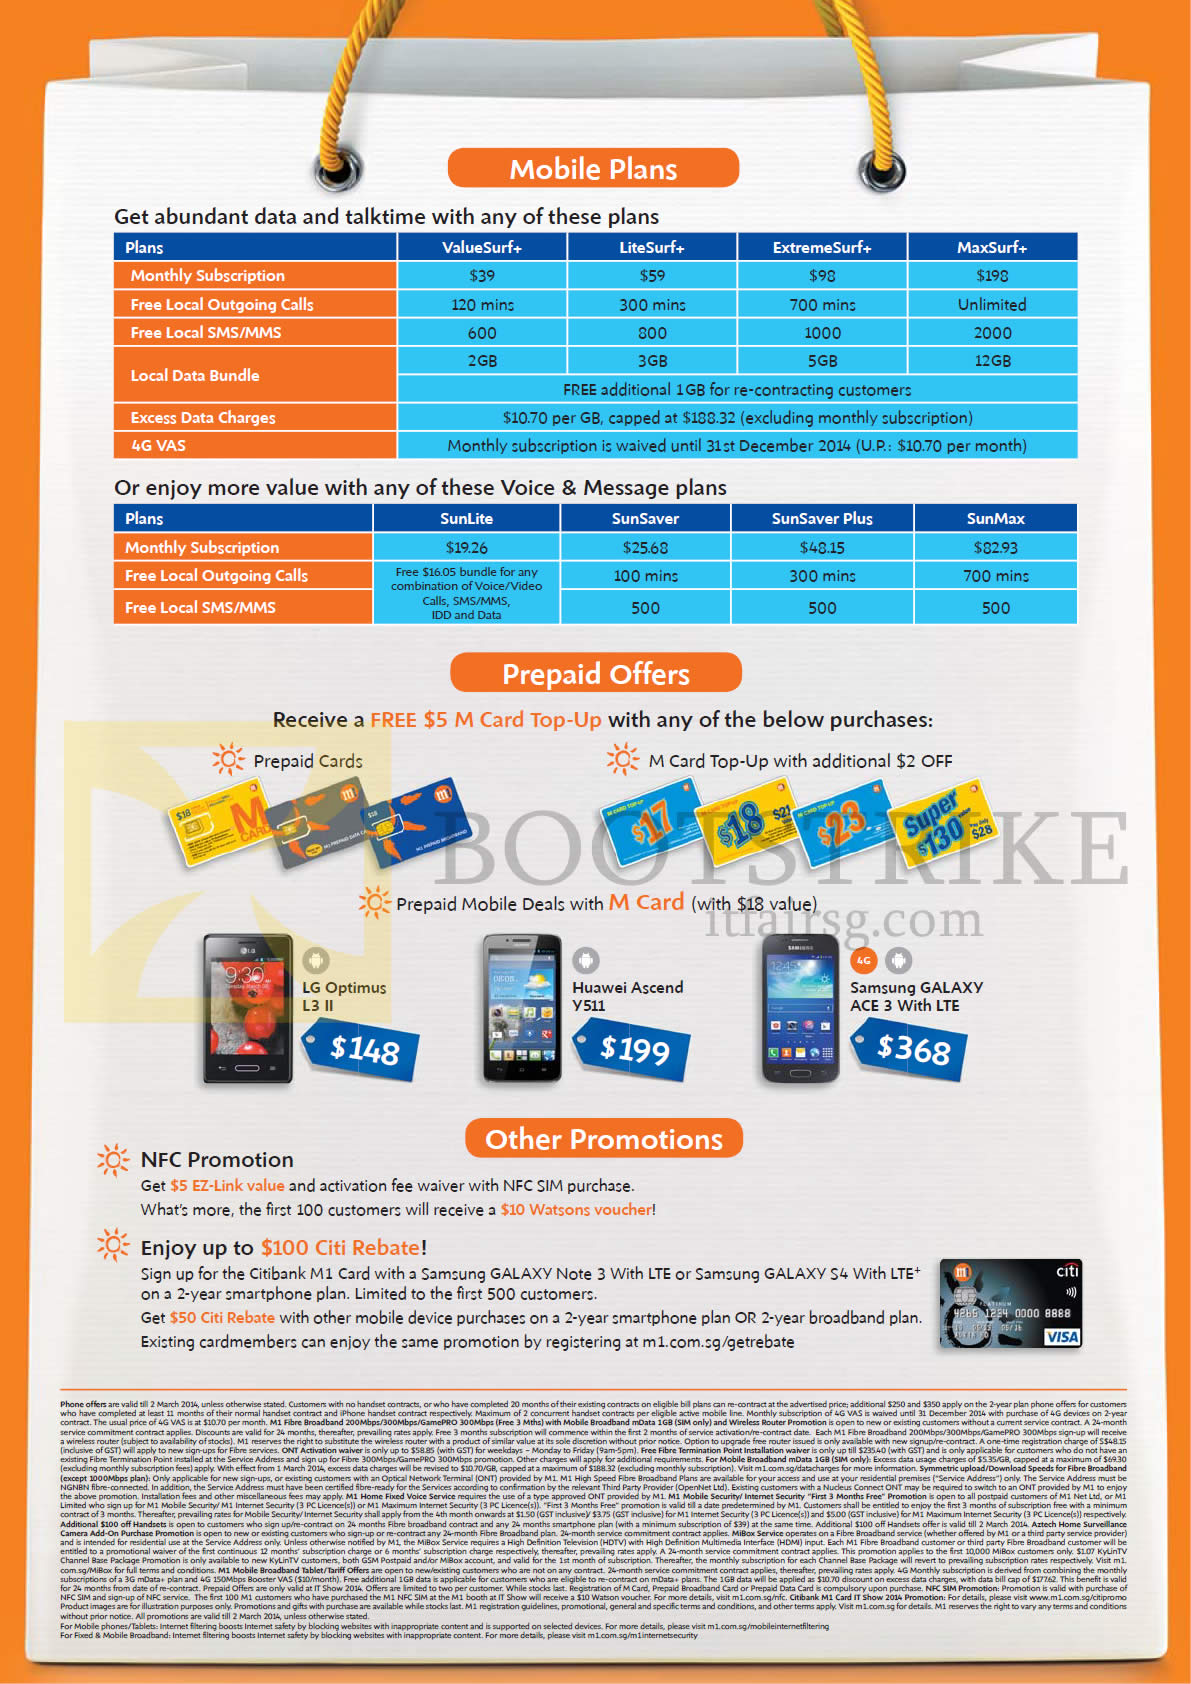 IT SHOW 2014 price list image brochure of M1 Prepaid M Card, Mobile Plans ValueSurf LiteSurf ExtremeSurf MaxSurf SunLite Sunsaver Plus SunMax, LG Optimus L3 II, Huawei Ascend Y511, Samsung Galaxy Ace 3, Citibank